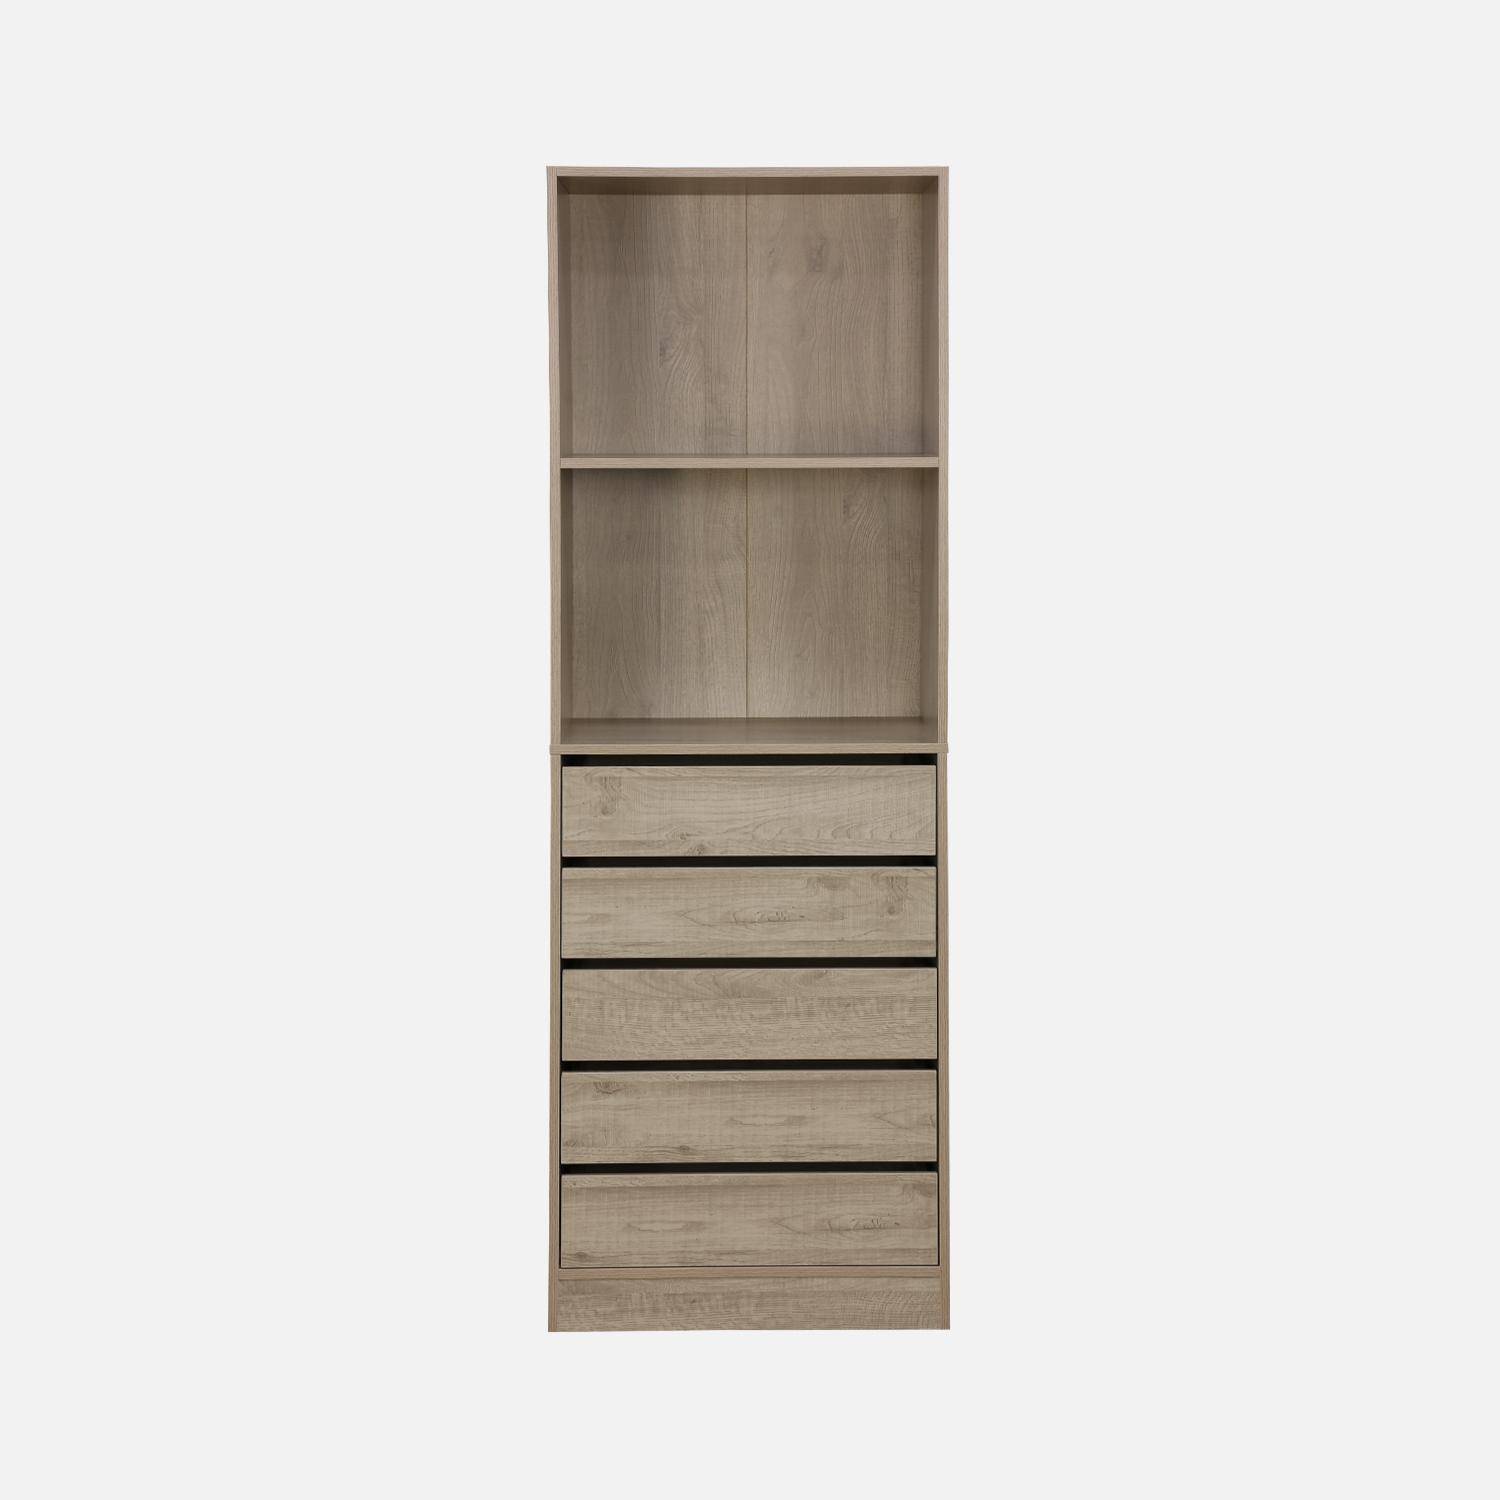 Modular open wardrobe drawer and shelf unit, 60x45x180cm, Modulo, 5 drawers, 2 shelves, Natural,sweeek,Photo5